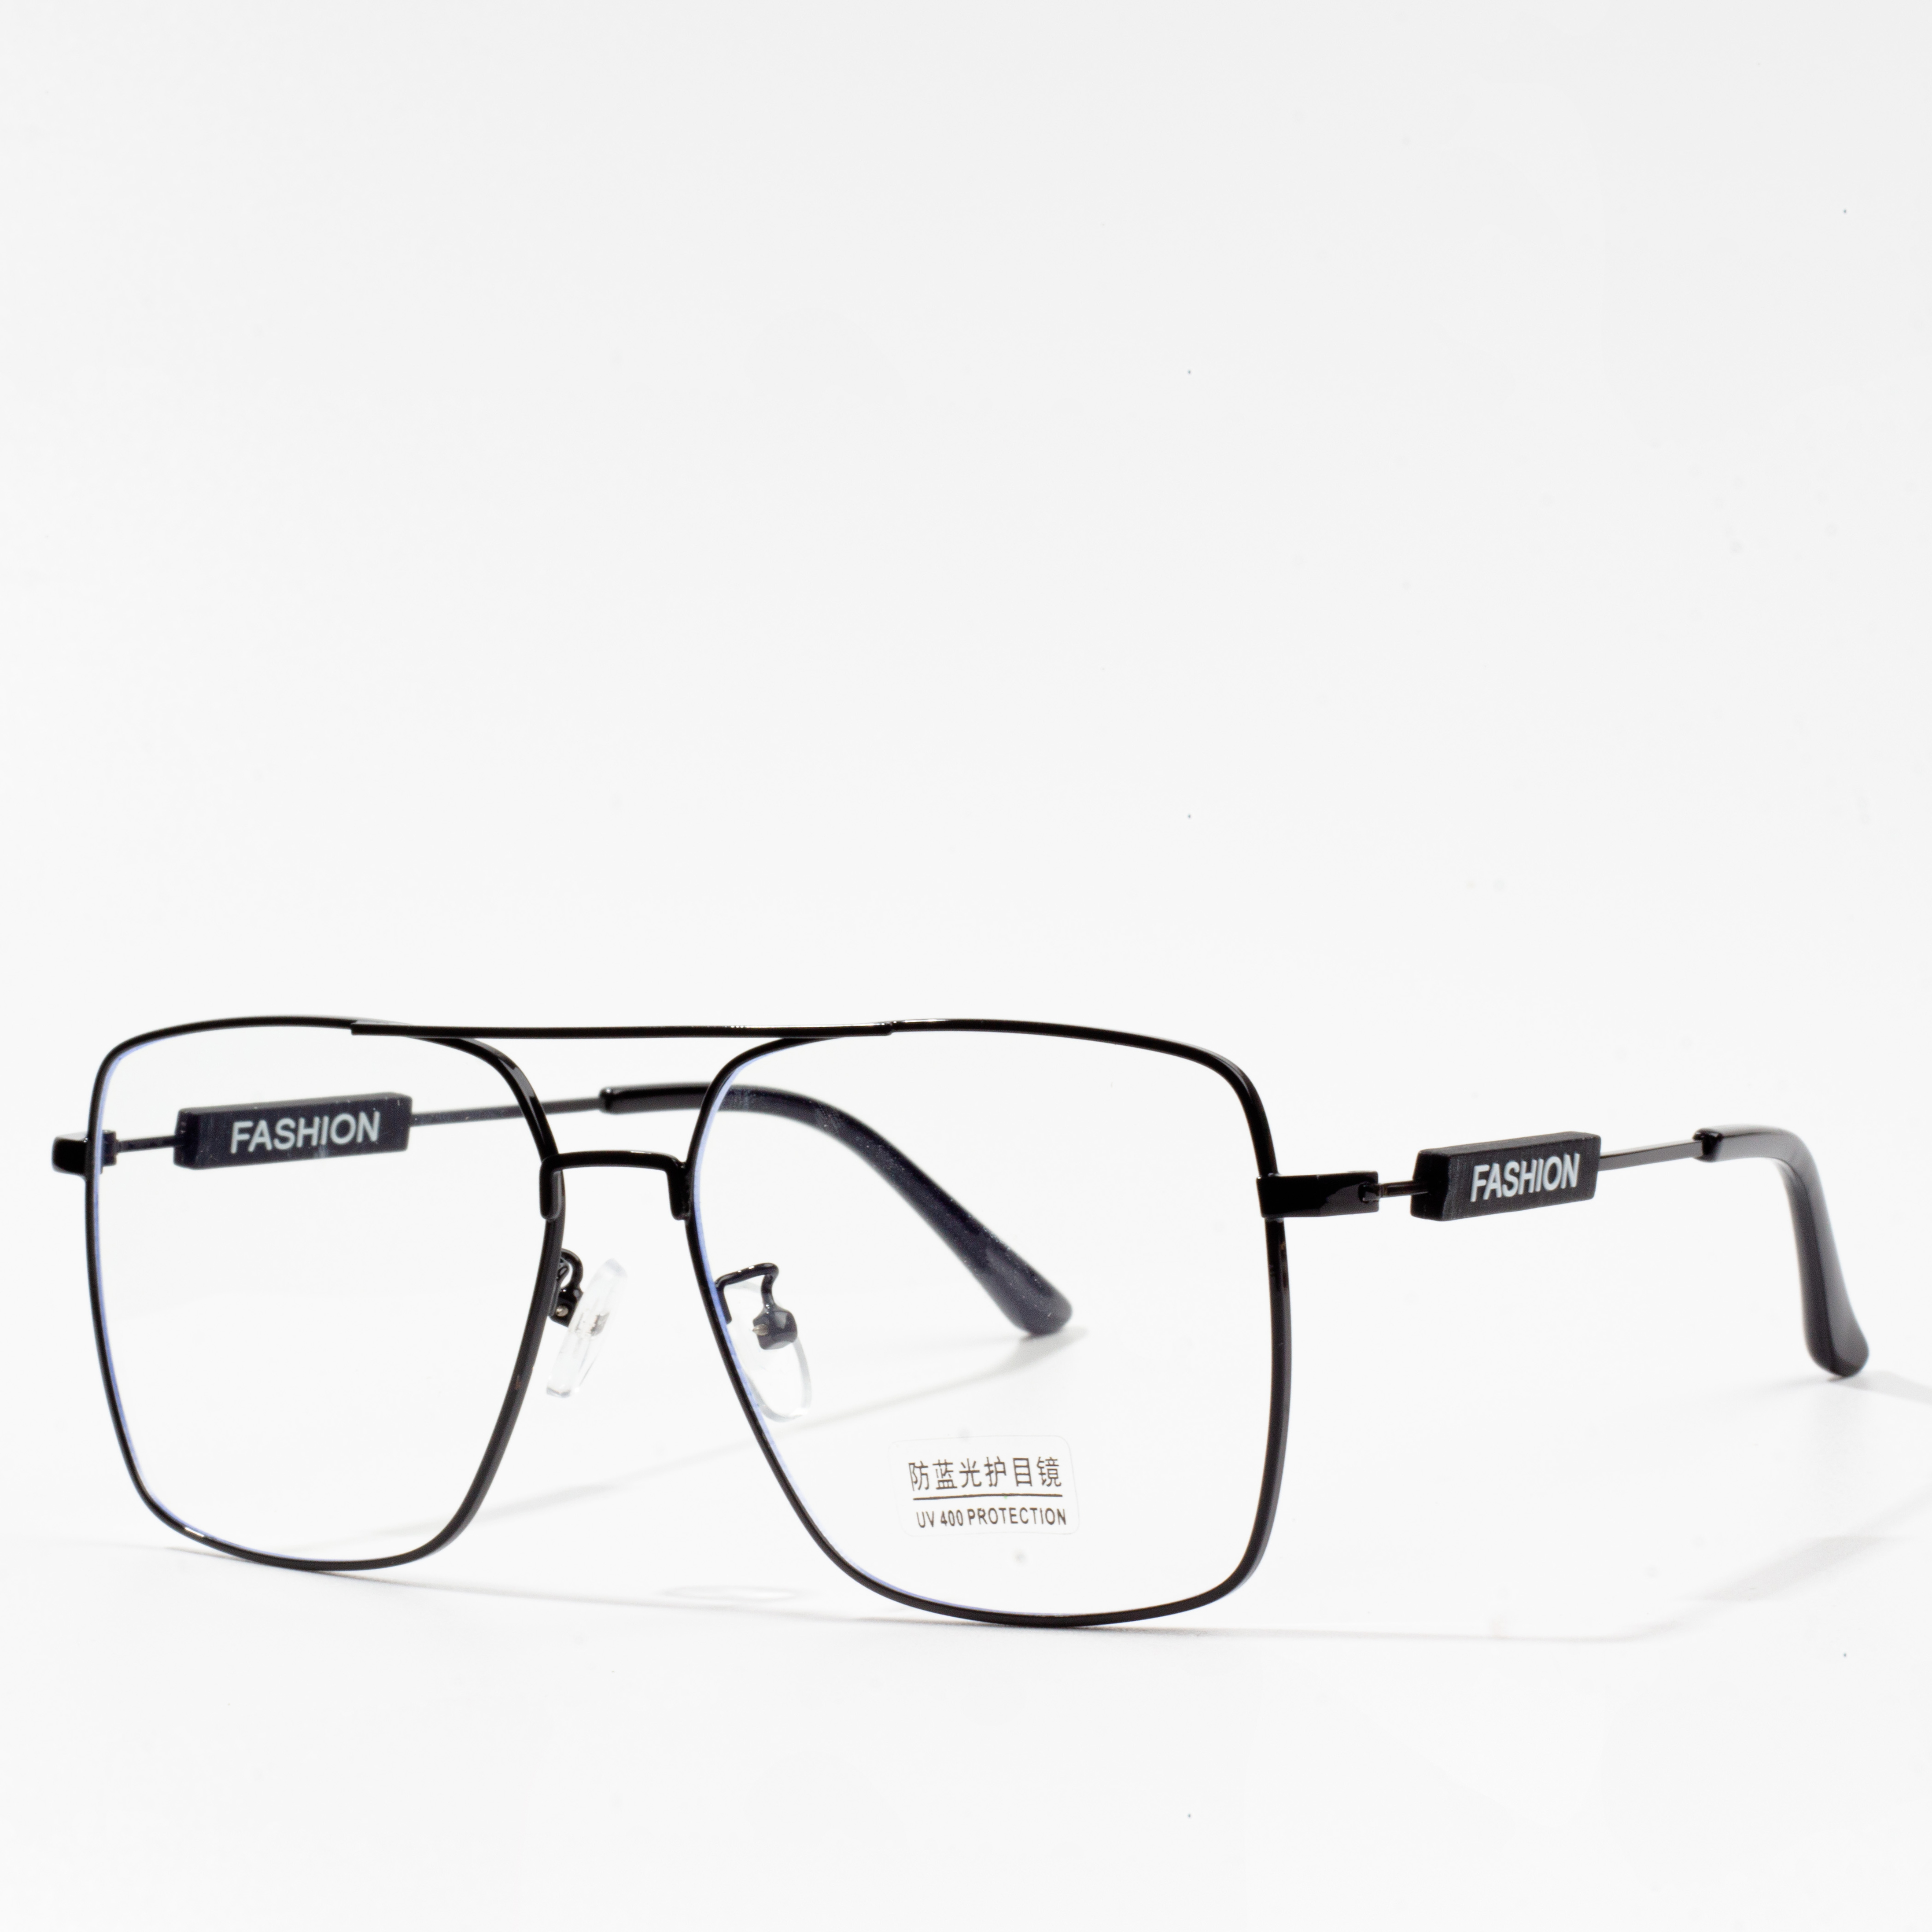 diva eyeglass frames